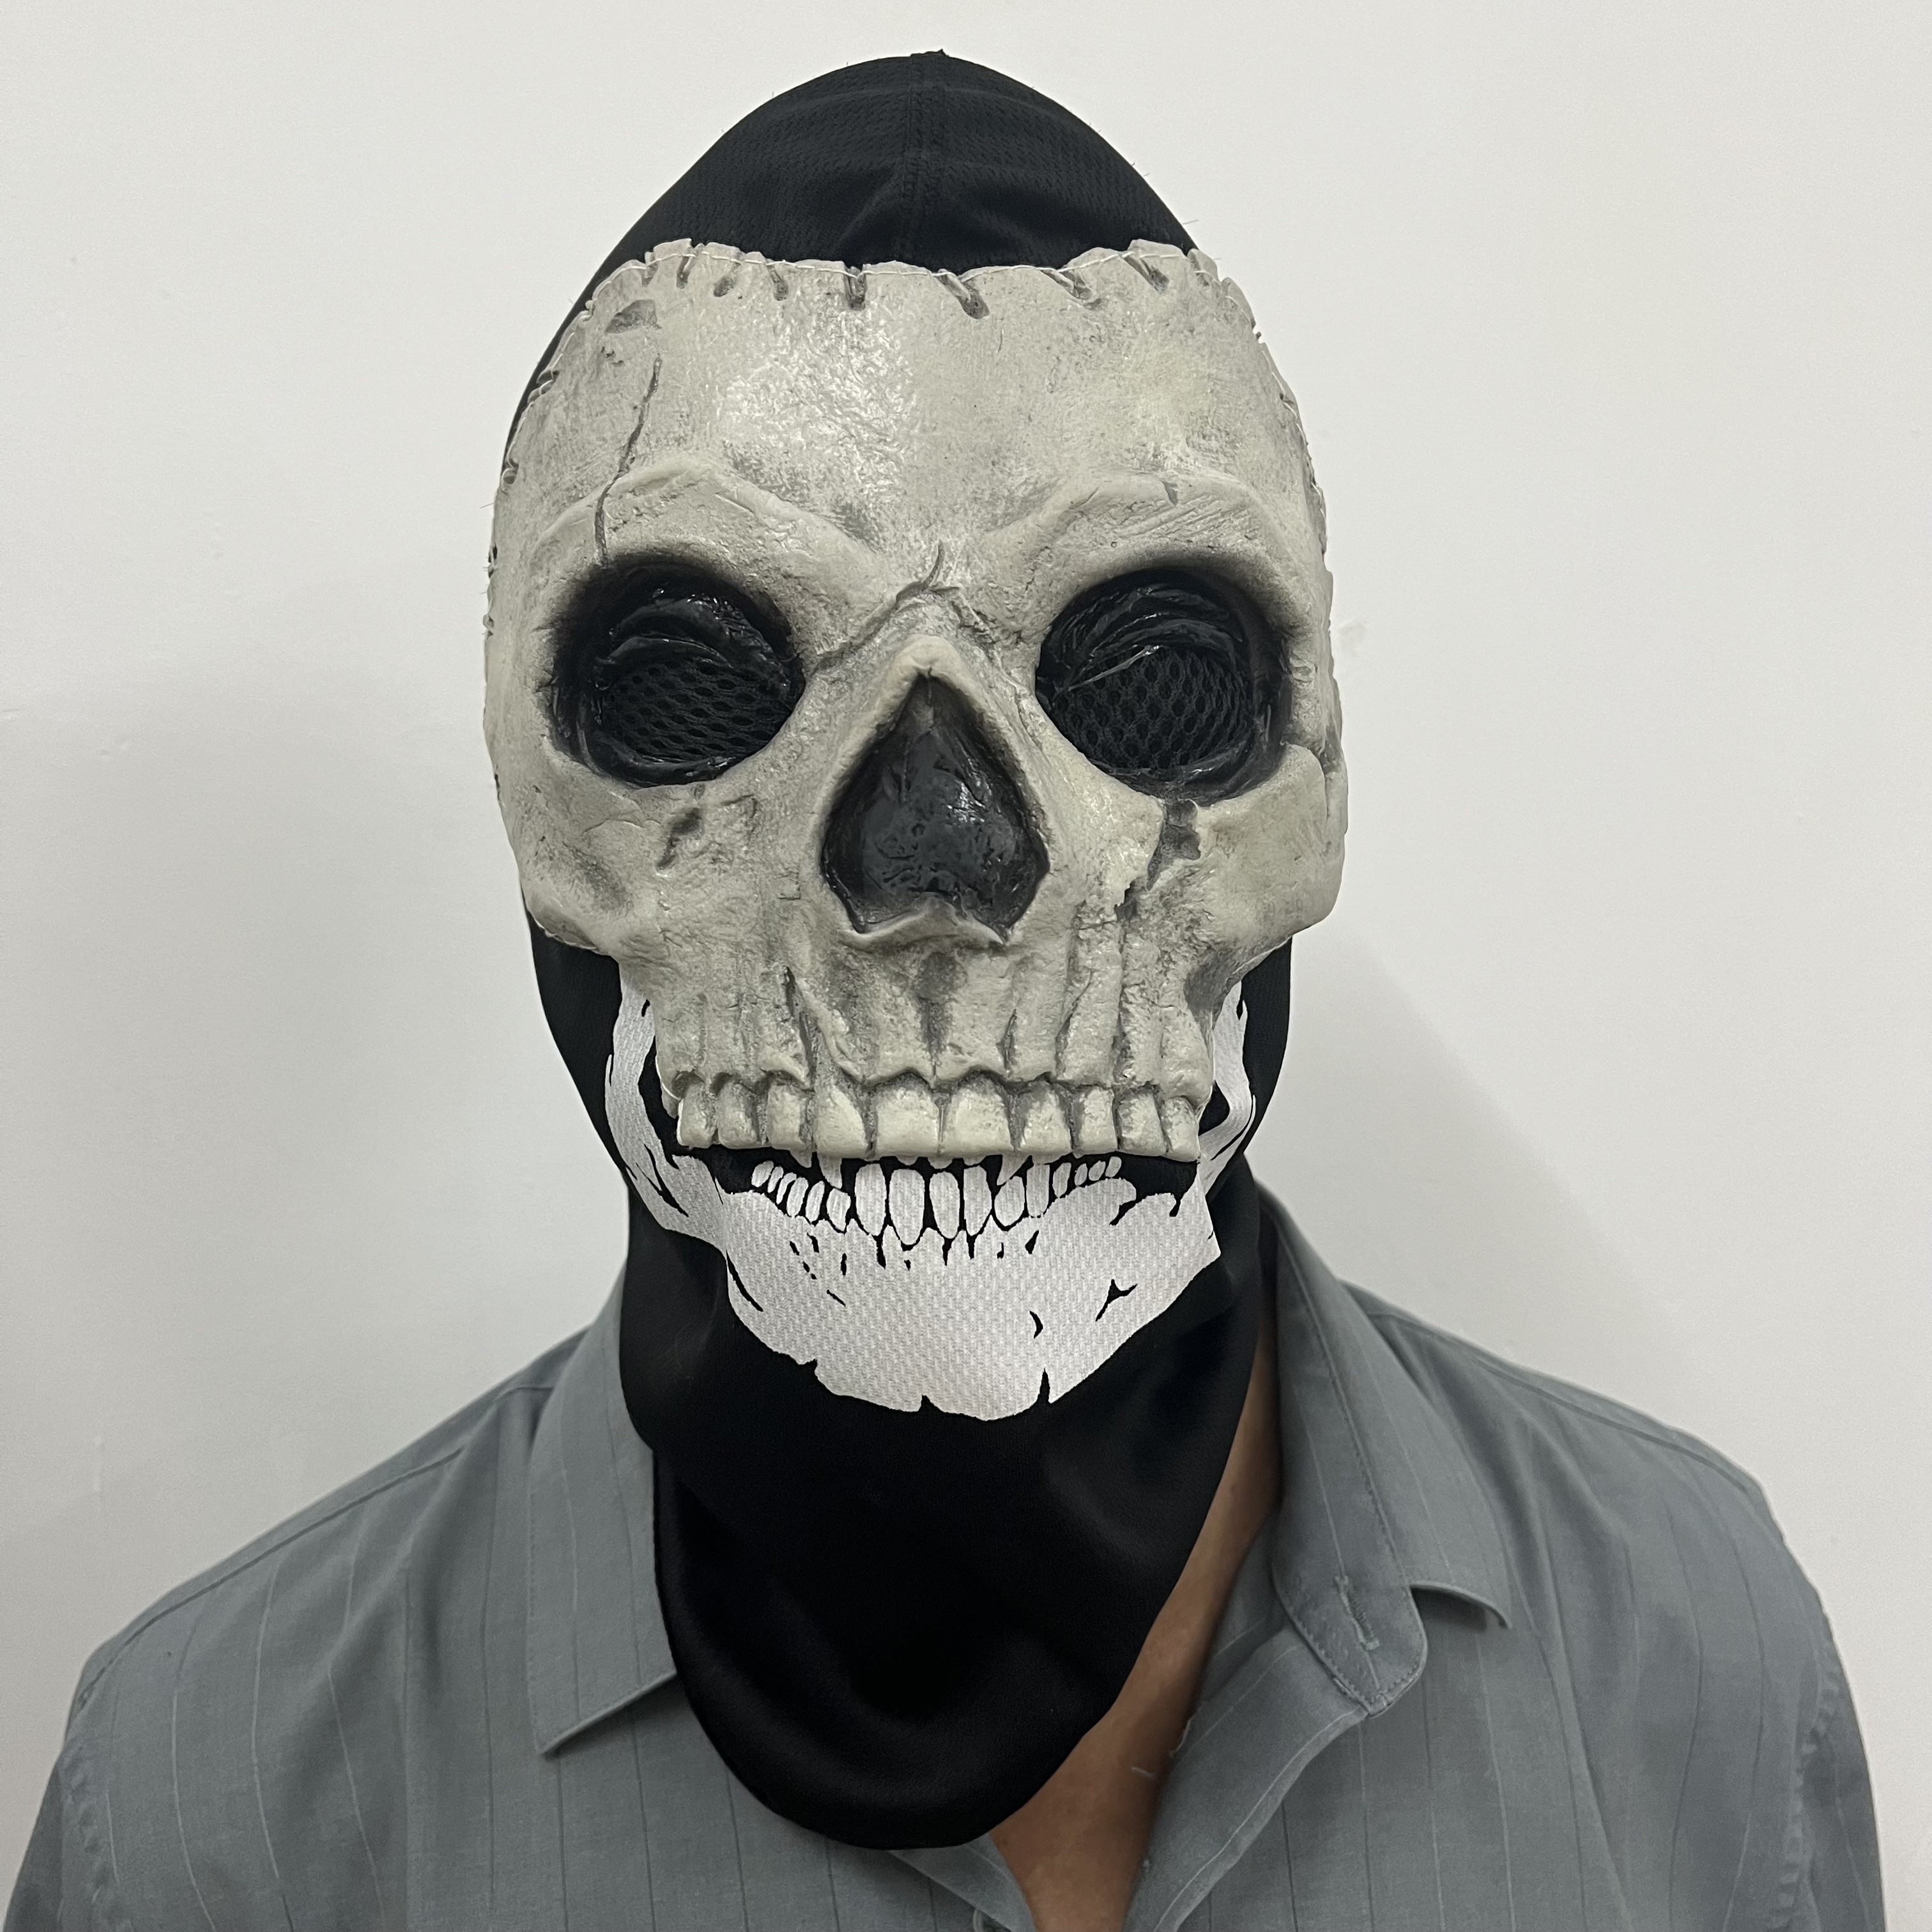 Unisex Horror Ghost Skull Mask ghost Call of Duty Latex Headgear